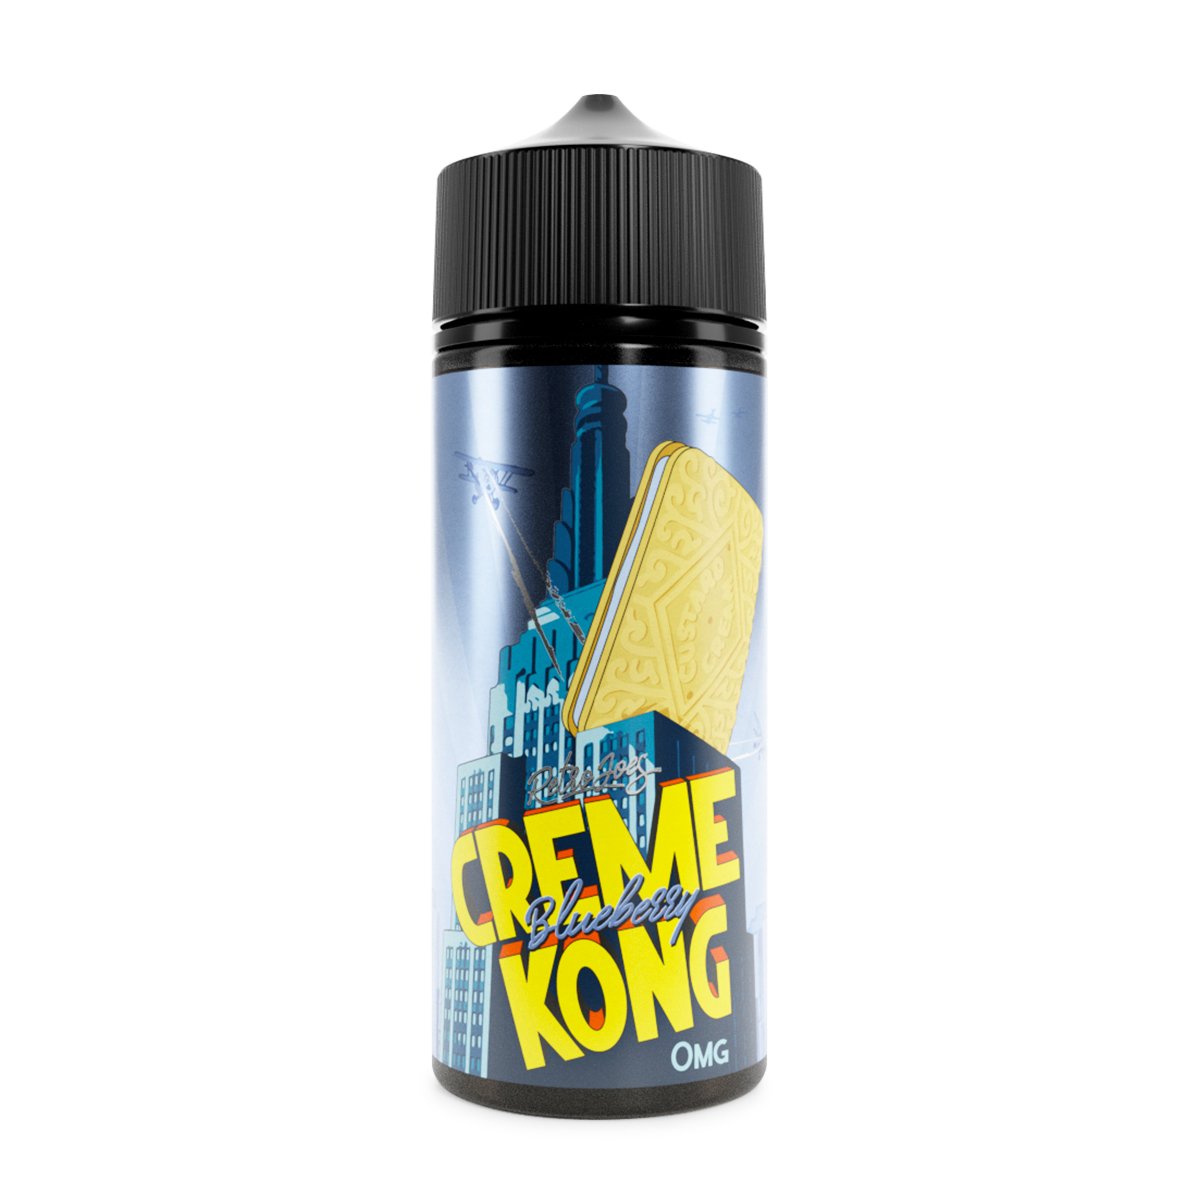 Retro Joes Creme Kong Blueberry 0mg 100ml Shortfill E-Liquid